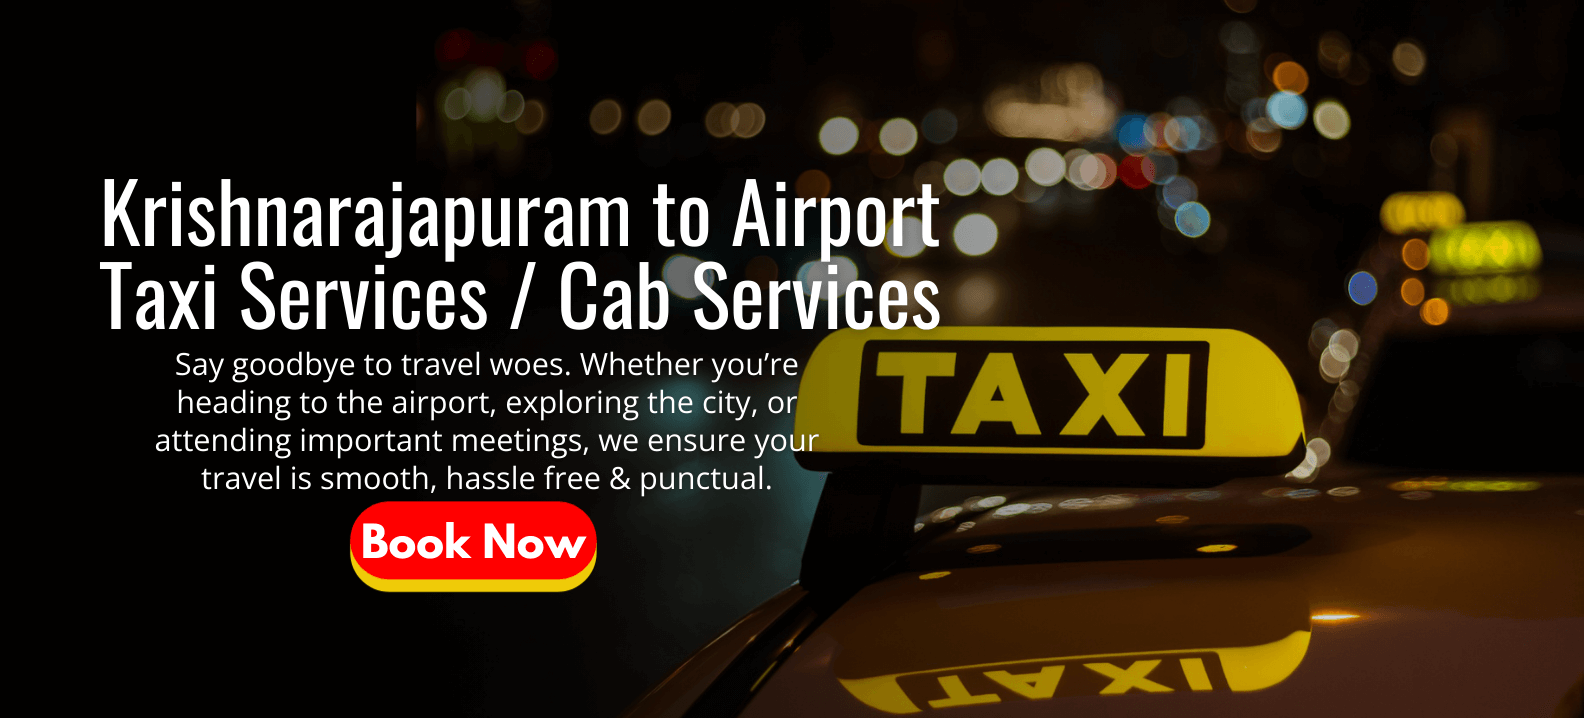 Krishnarajapuram to Airport Taxi Services Cab Services